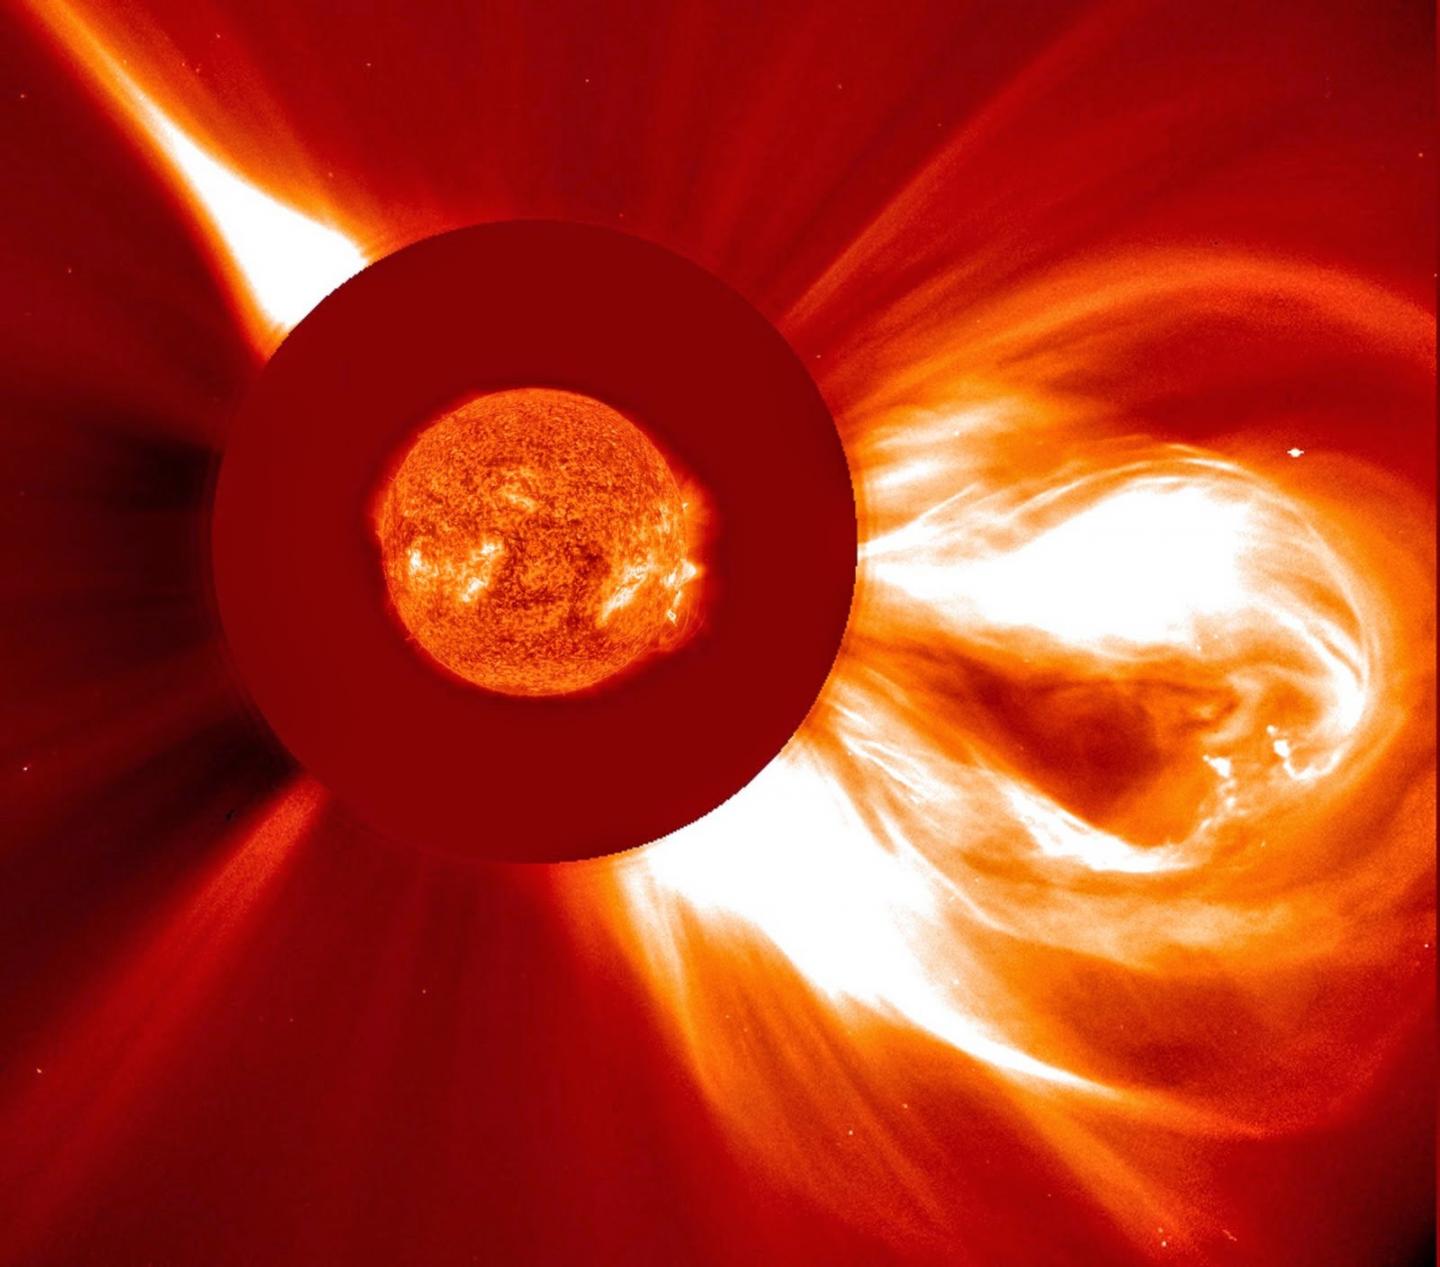 SOHO Image of Coronal Mass Ejection (Composite)